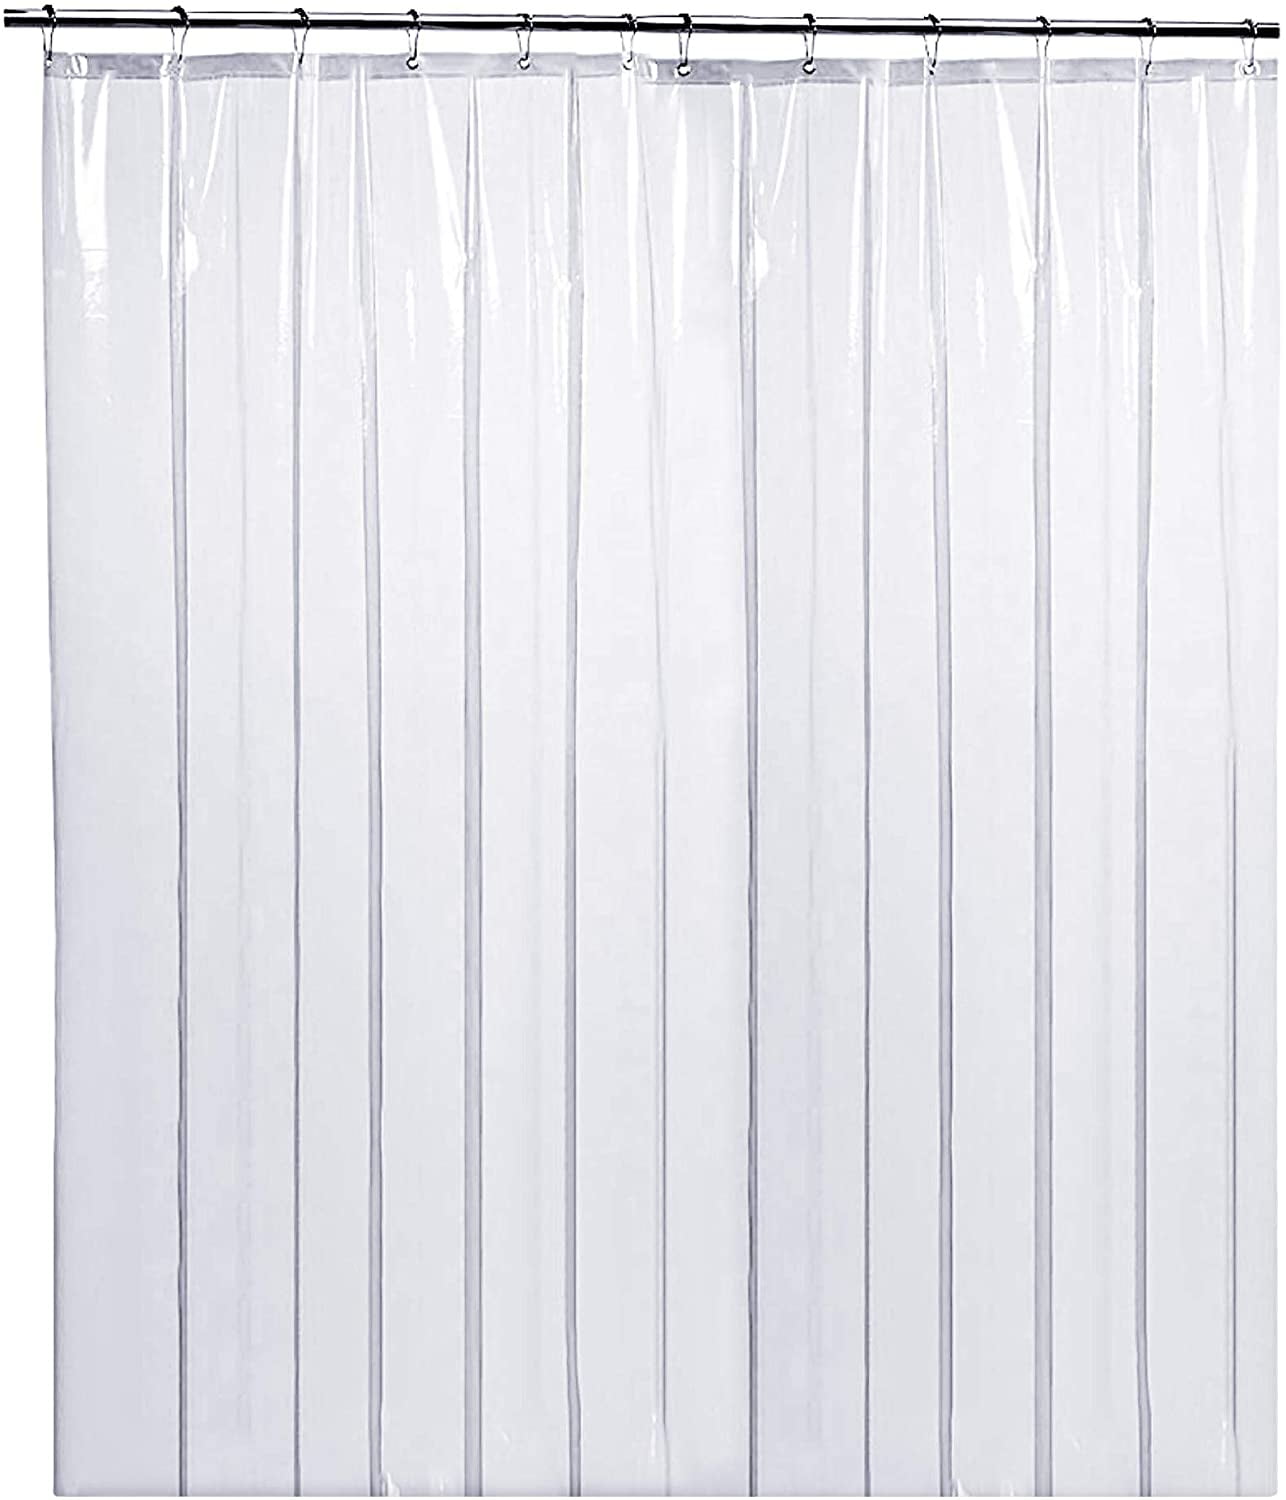 Liba Peva 8g Bathroom Shower Curtain, Peva Shower Curtain Liner Clear